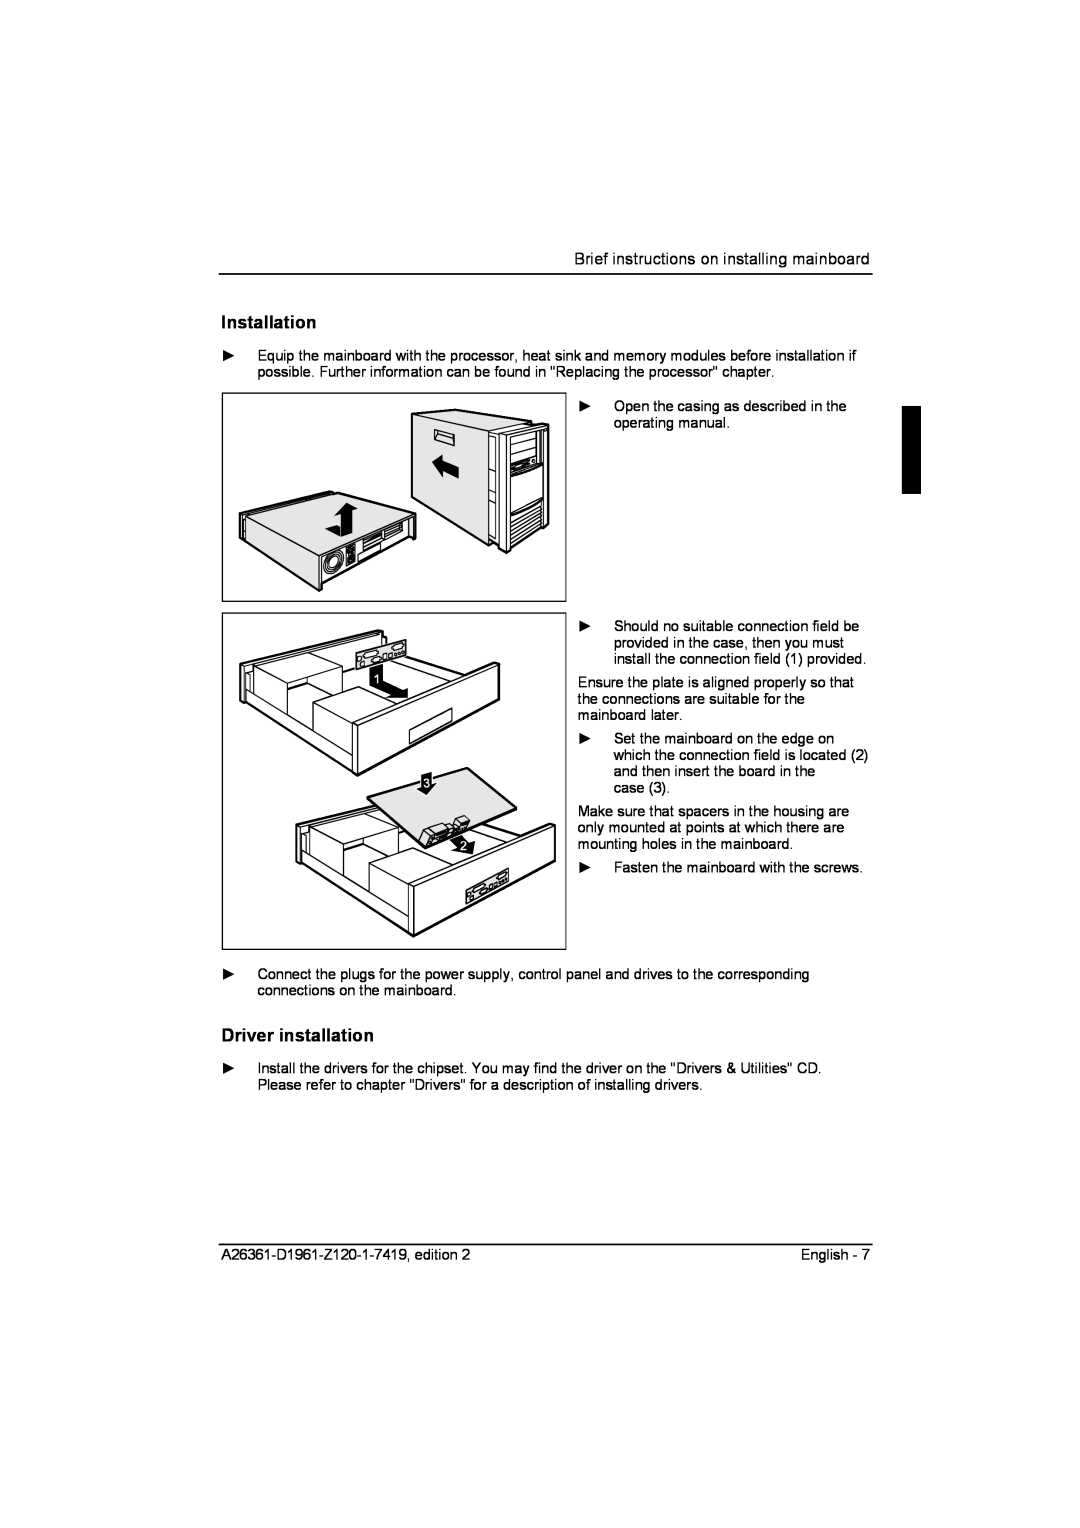 Fujitsu D1961 technical manual Installation, Driver installation, Brief instructions on installing mainboard 